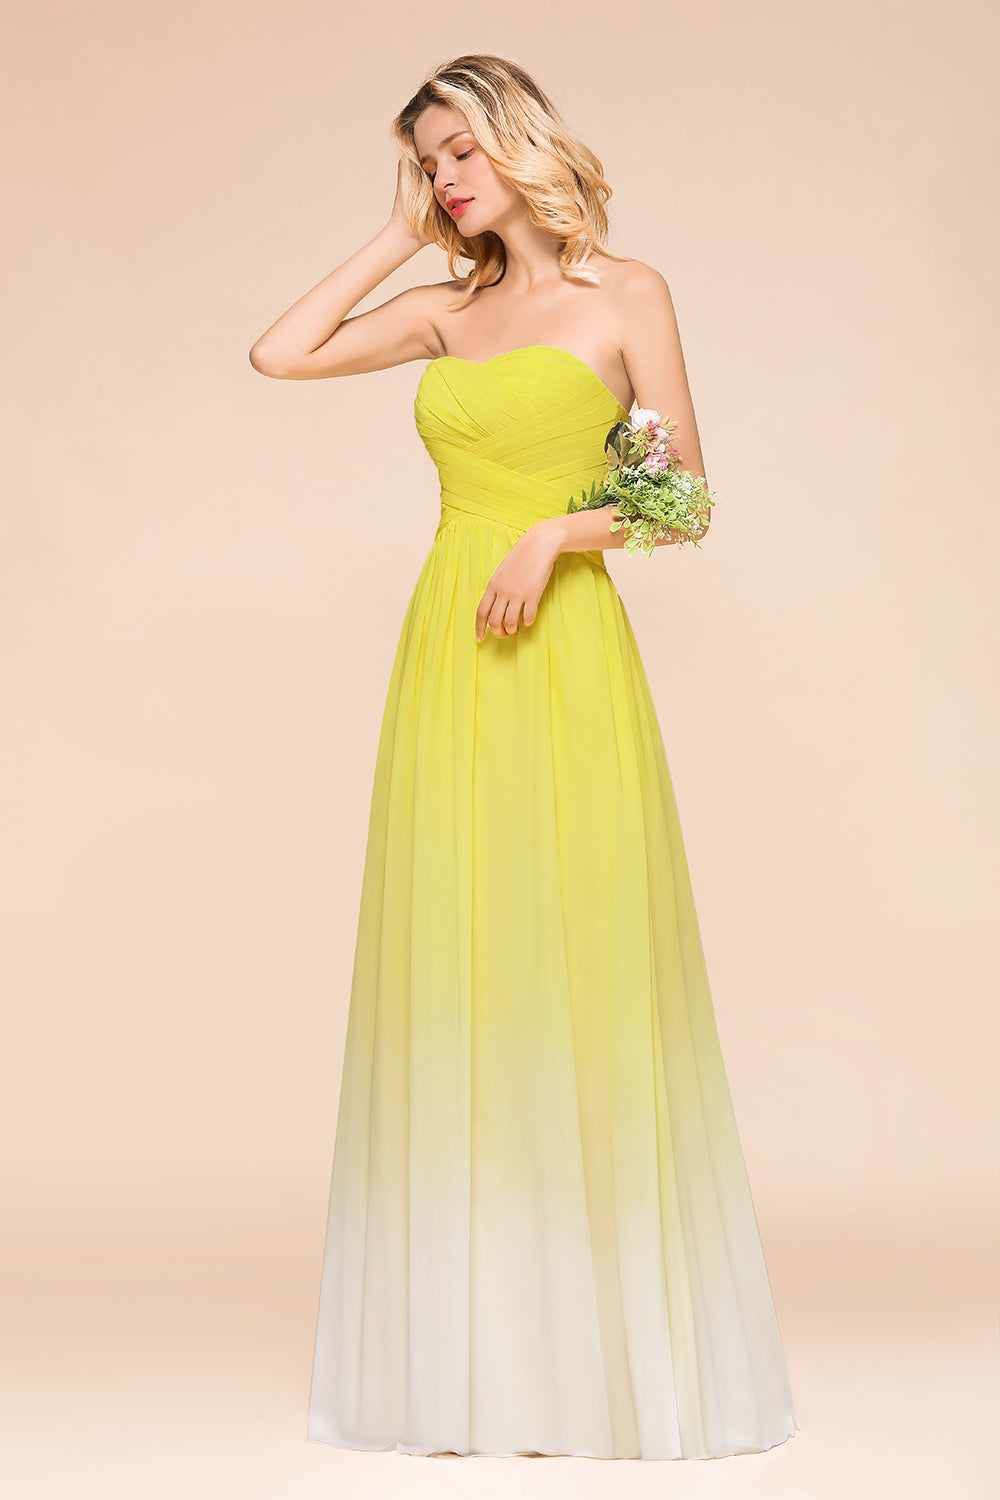 Fashionable Sweetheart Ruffle Yellow Ombre Bridesmaid Dress-27dress